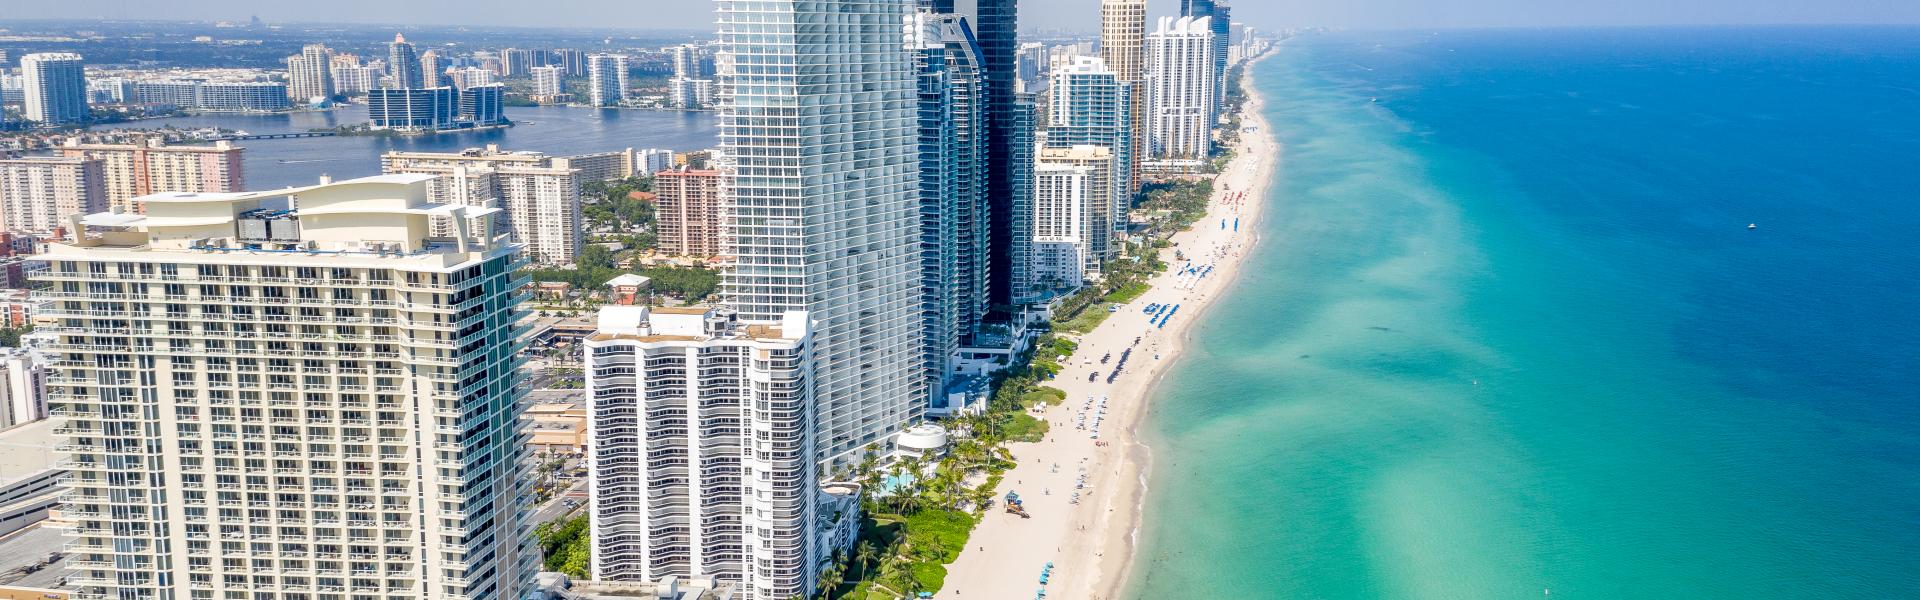 Find the perfect vacation home in Miami - Casamundo